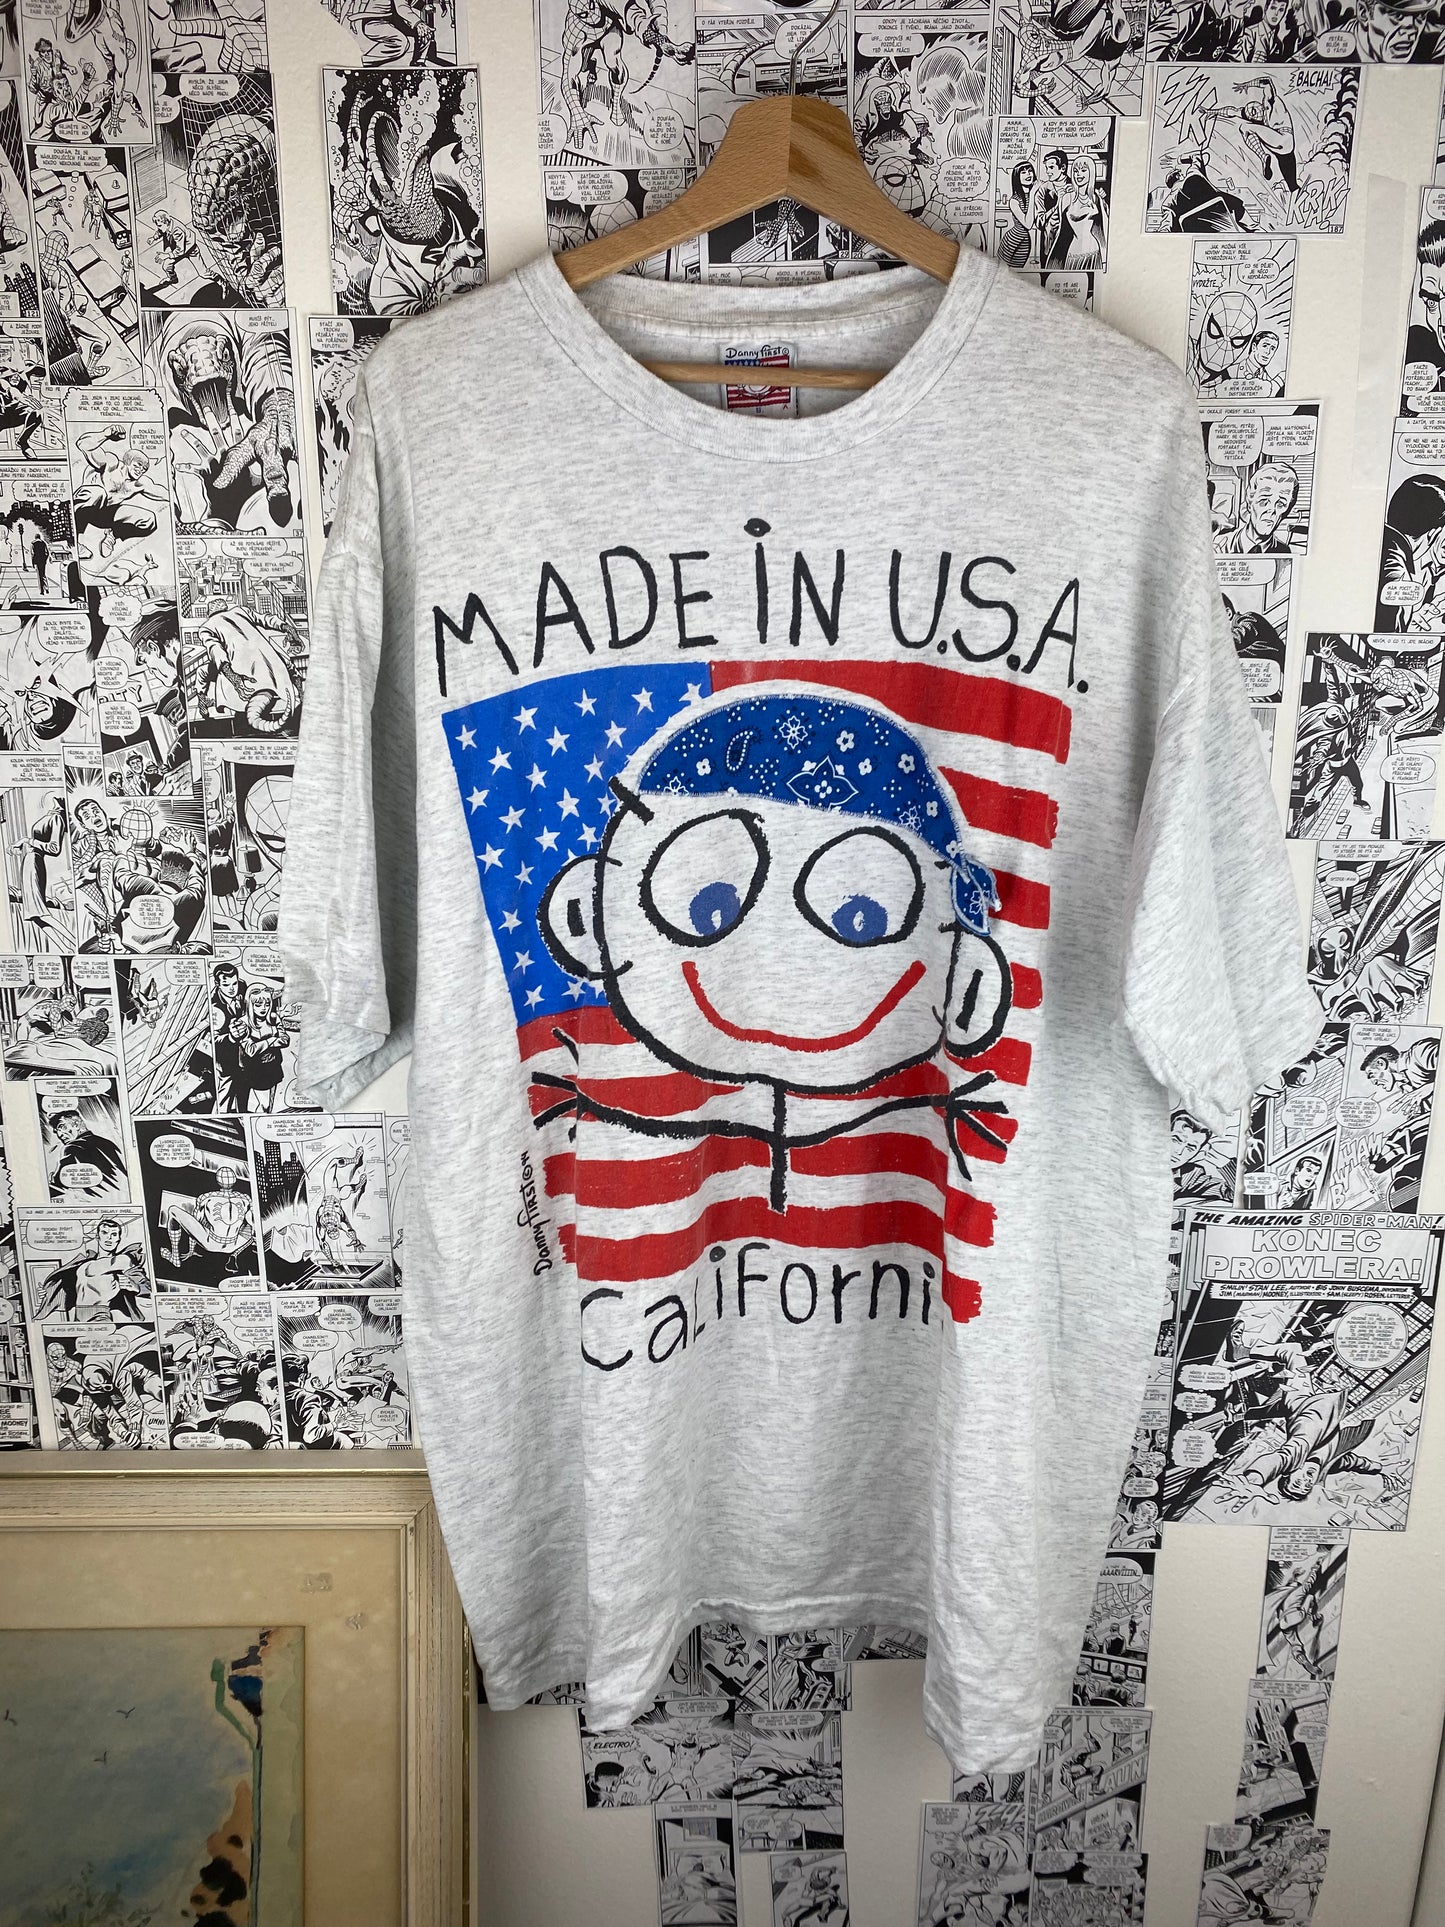 Vintage Danny First 90s USA Art t-shirt - size XL